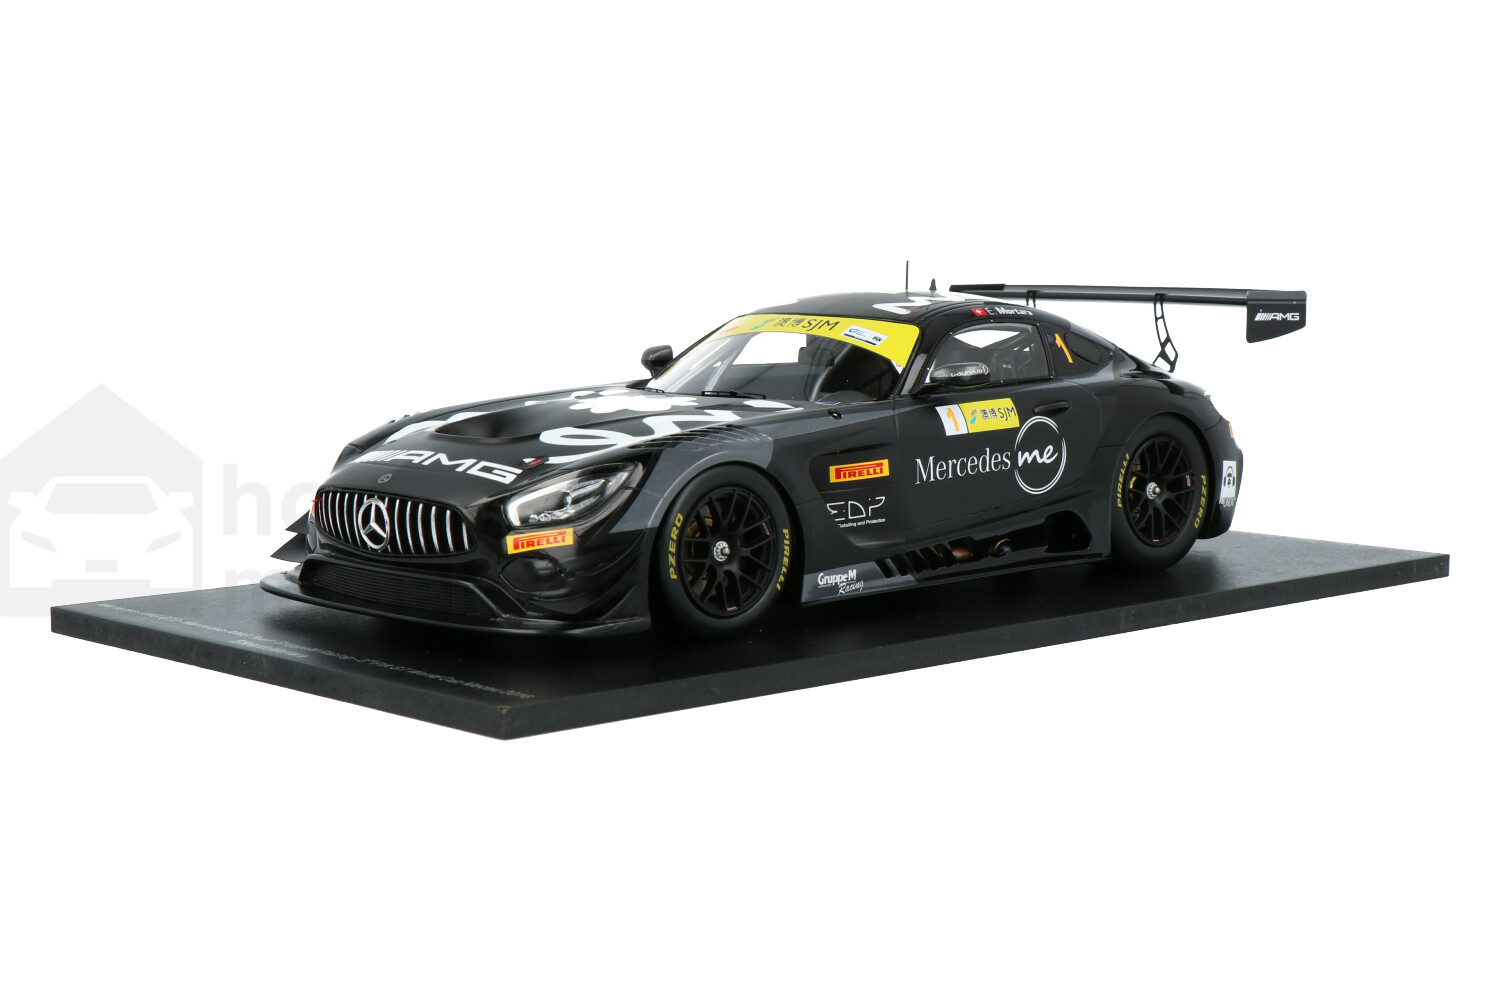 Mercedes-AMG AMG GT3 - Modelauto schaal 1:18